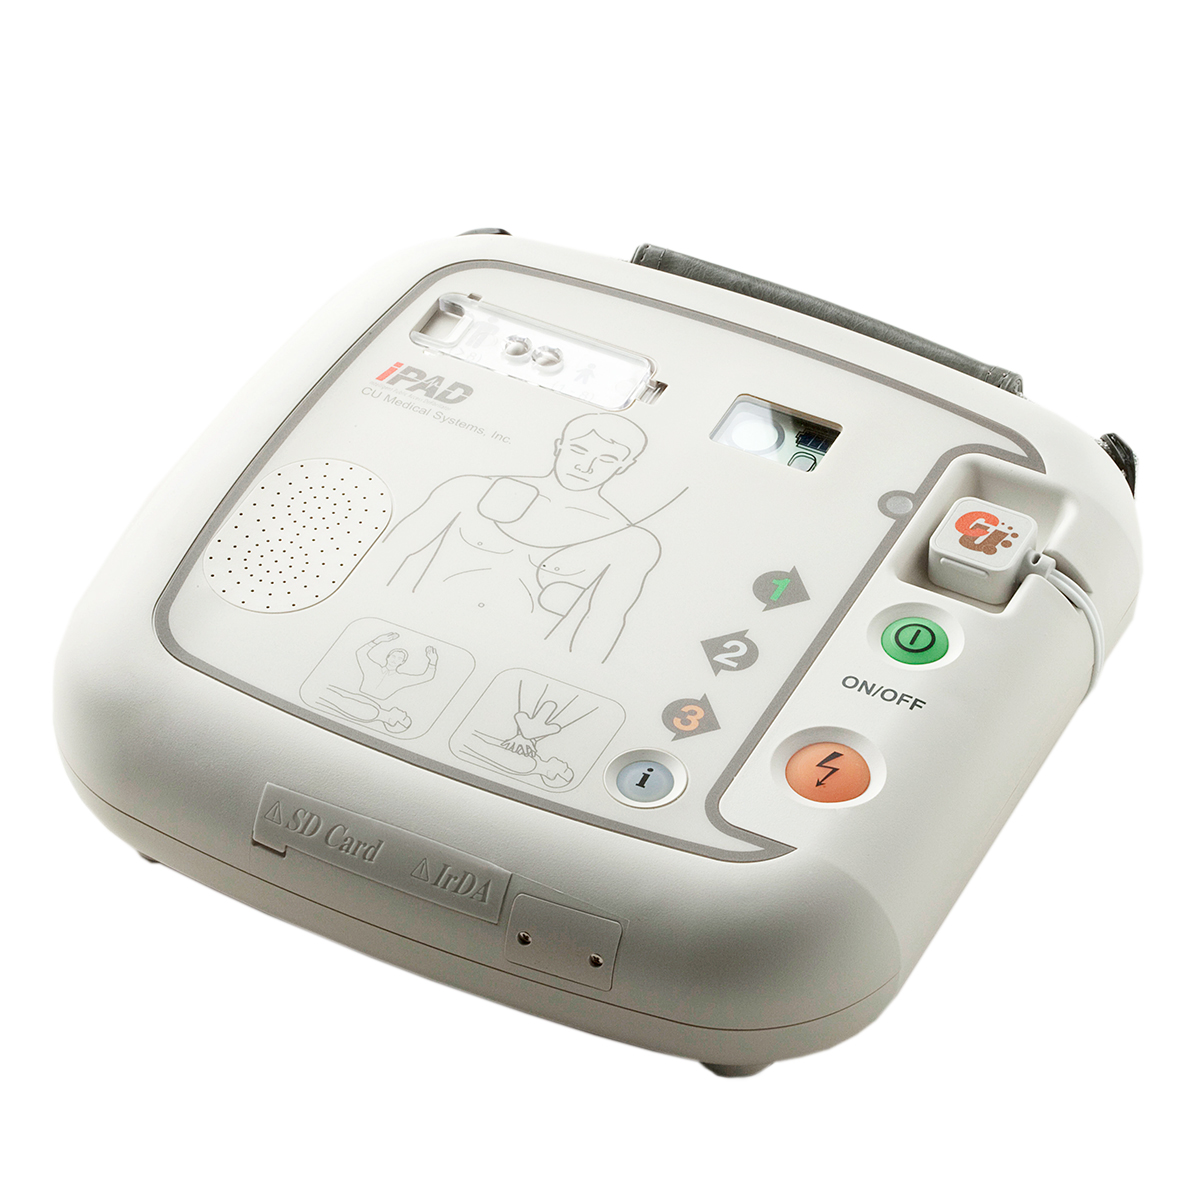 Heartsine Samaritan® iPAD SP1 Semi-Automatic Defibrillator